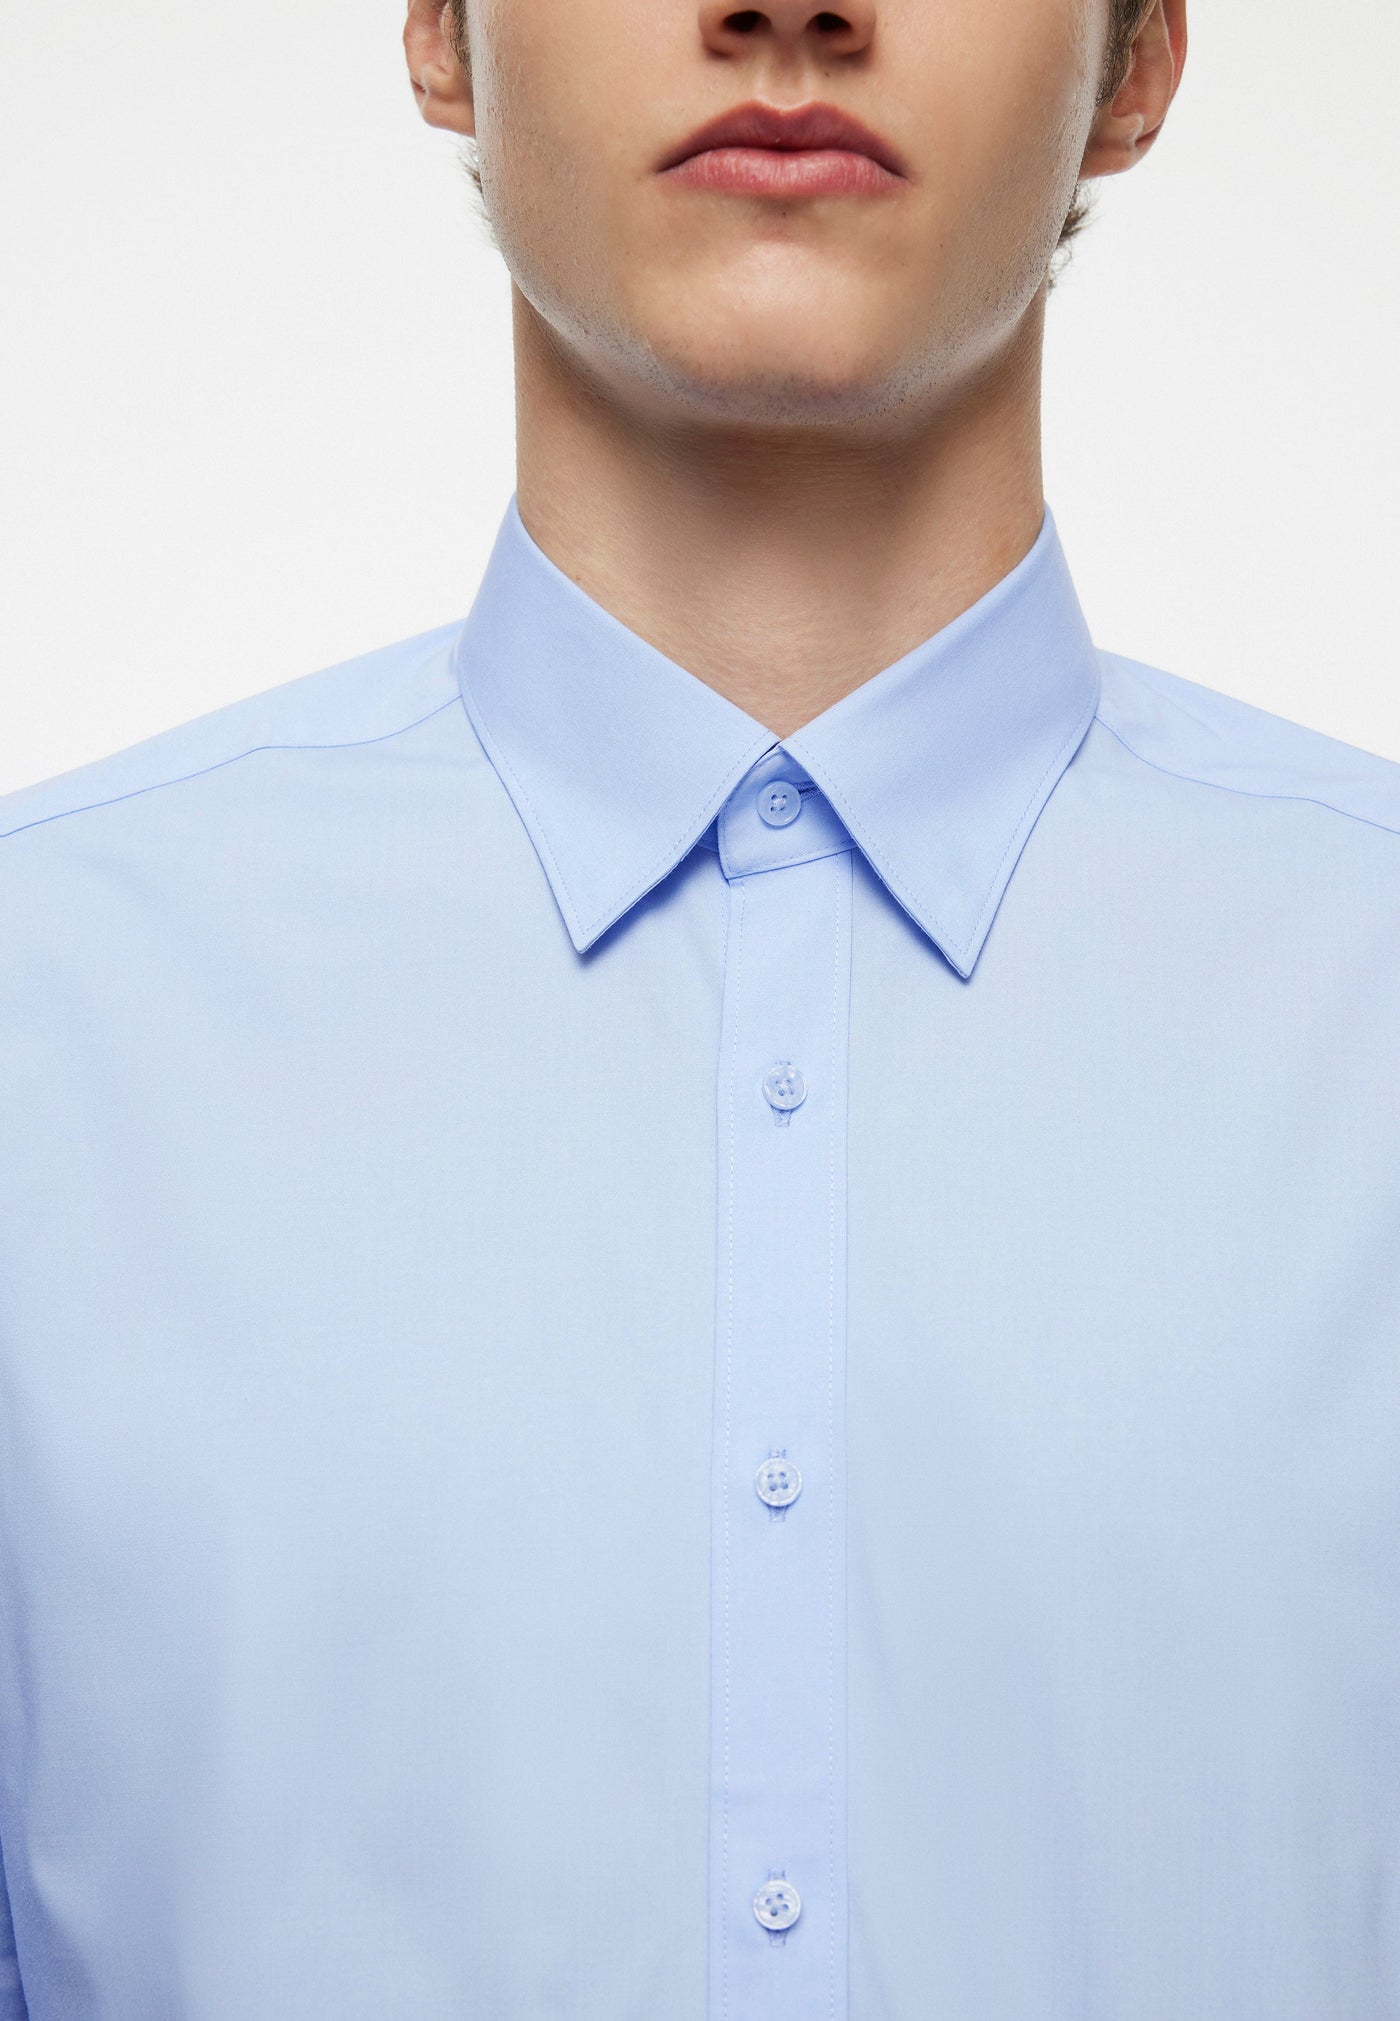 Mensteven - Soft Touch Stretch Formal Shirt Smart Fit